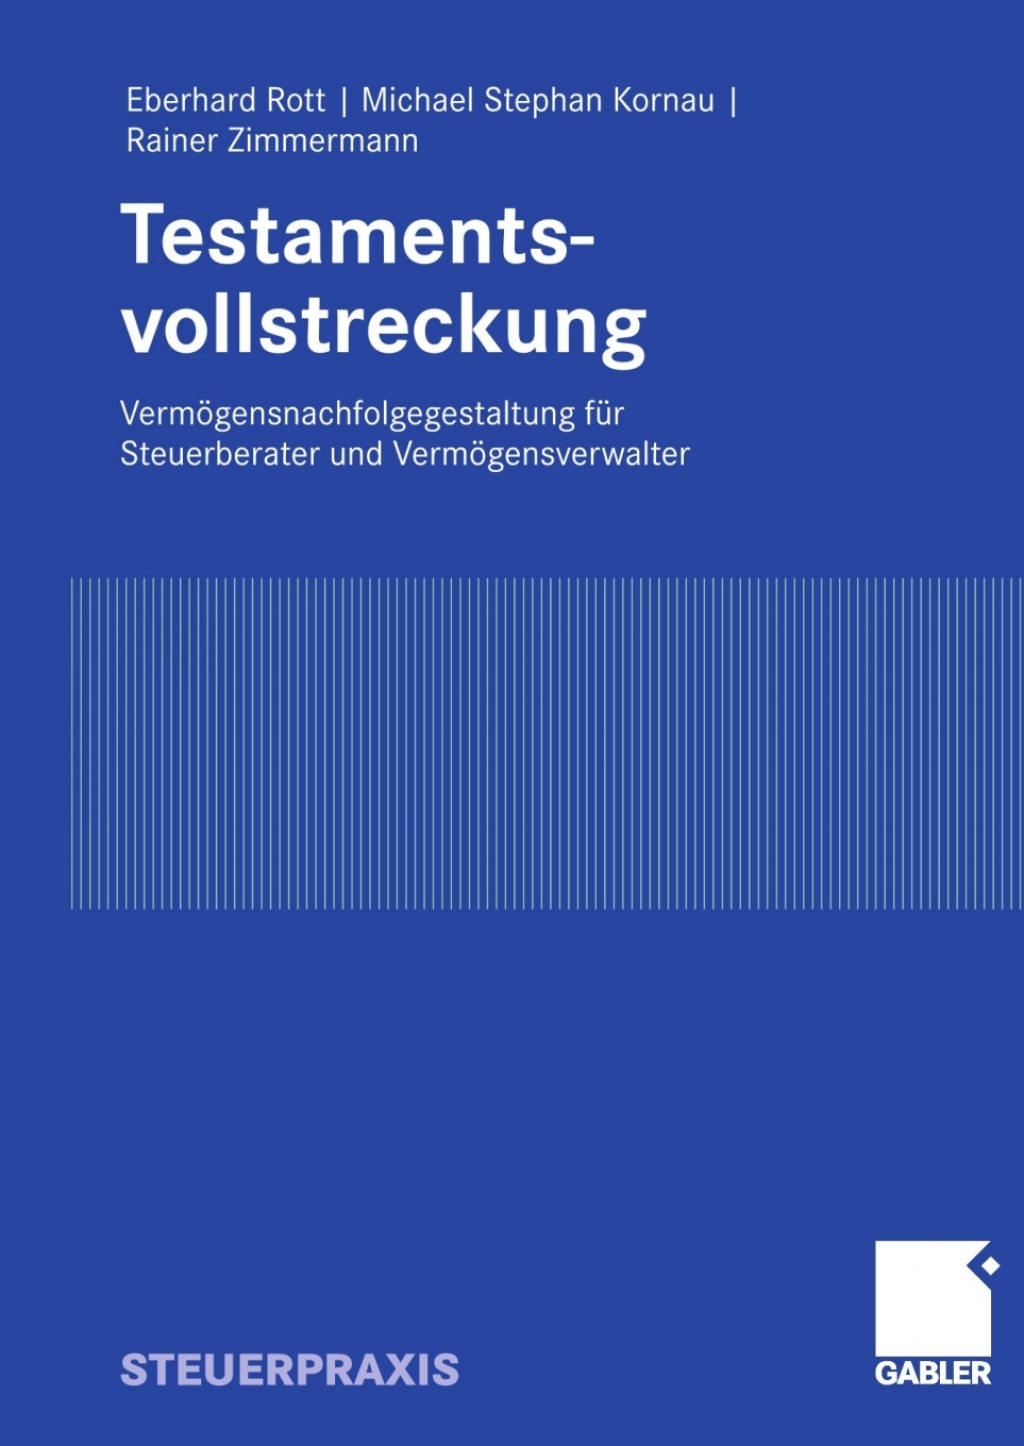 Testamentsvollstreckung (eBook Rental) - Eberhard Rott; Michael Stephan Kornau; Rainer Zimmermann,